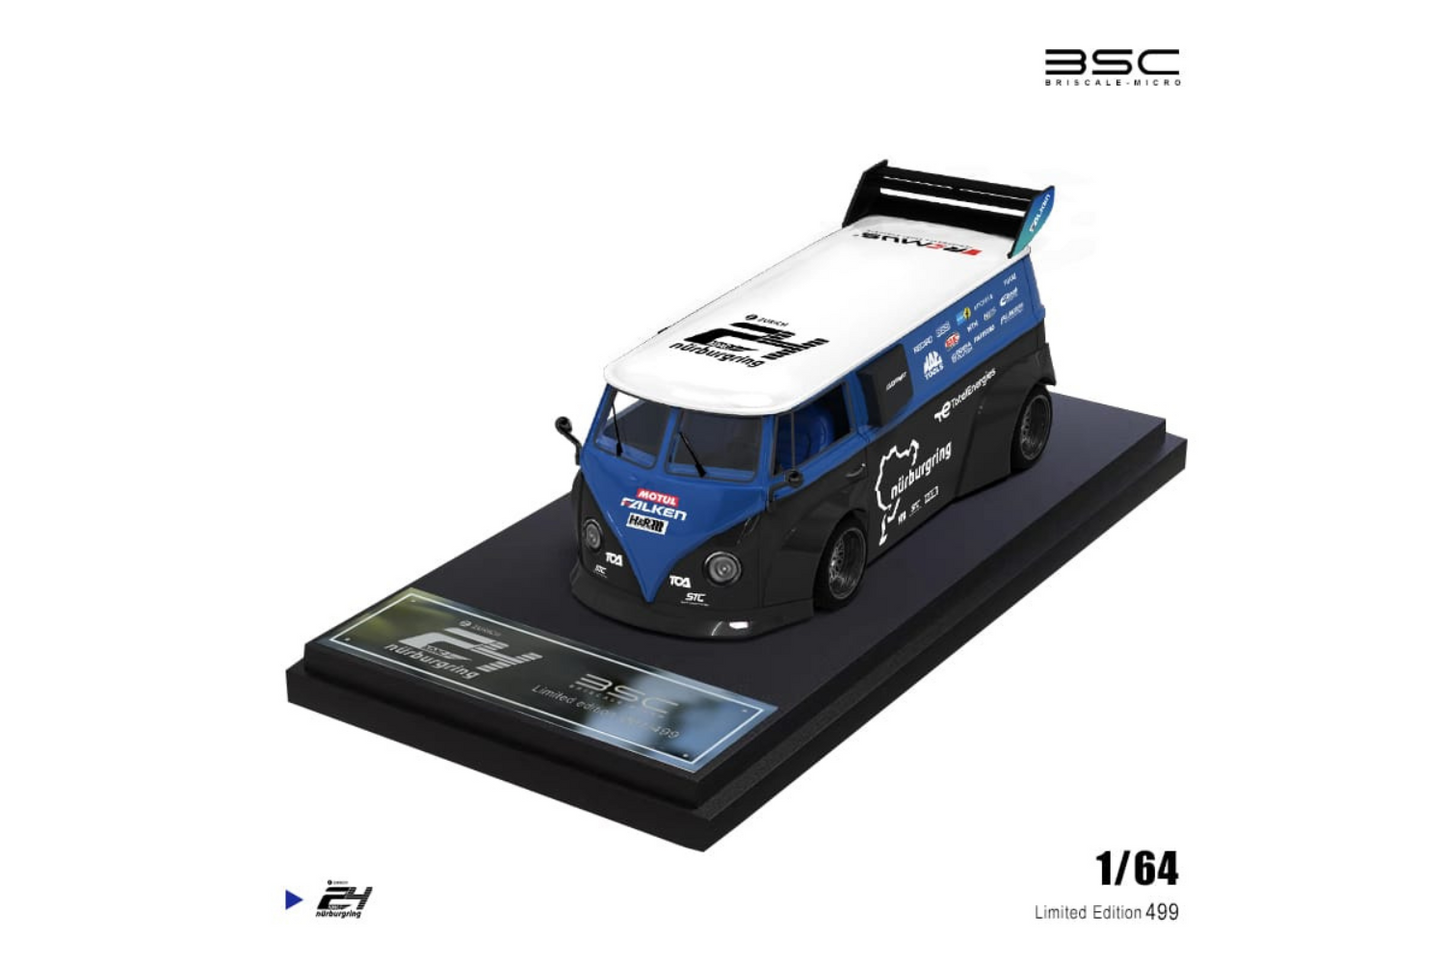 BSC 1/64 Subaru WRX STI - VW T1 Modified - Trailer & Repairmen Set in Subaru Event Livery